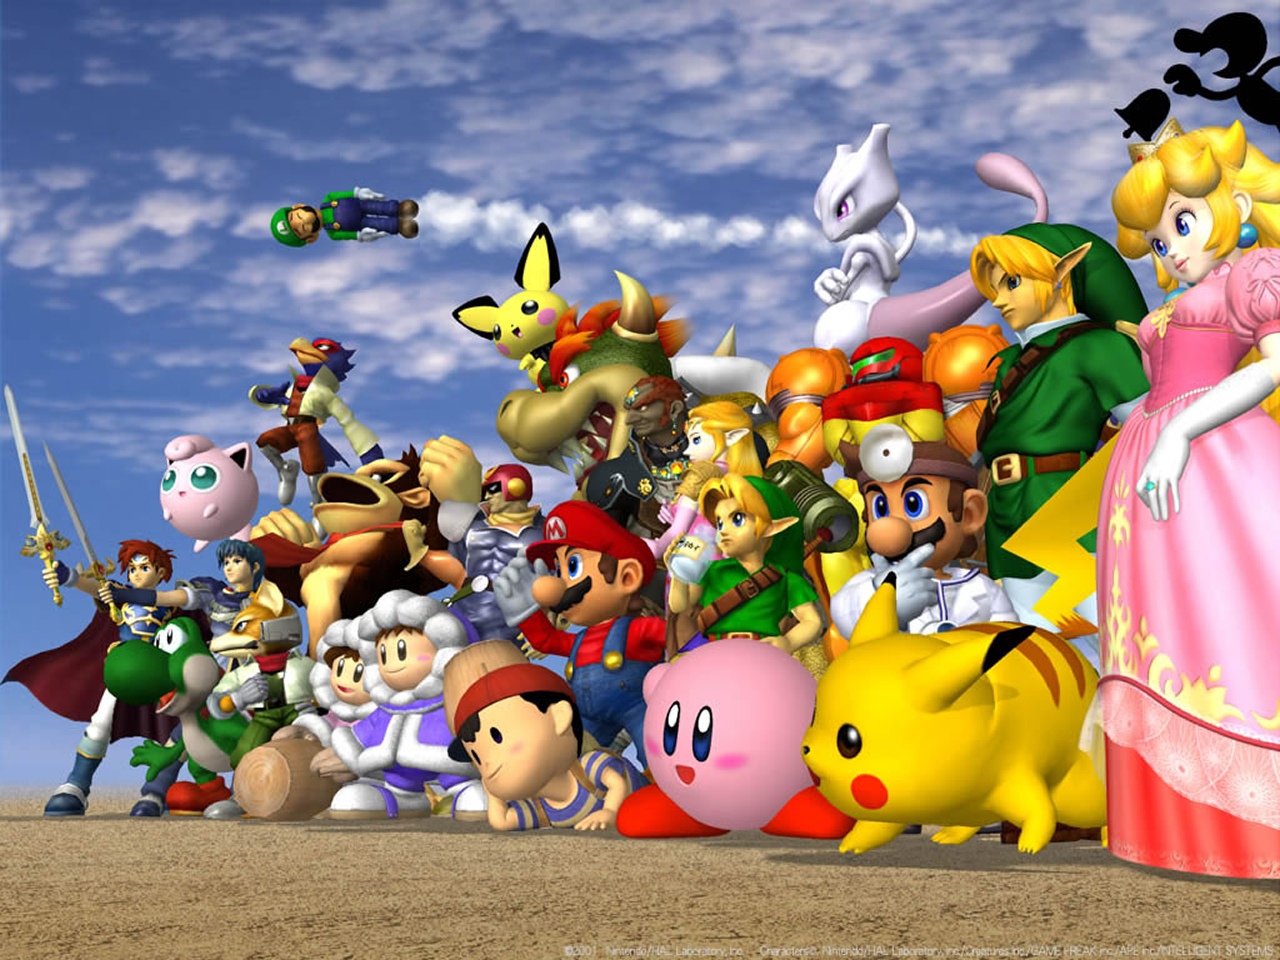 "Super Smash Bros. Melee" desktop wallpaper (1280 x 960 pixels)